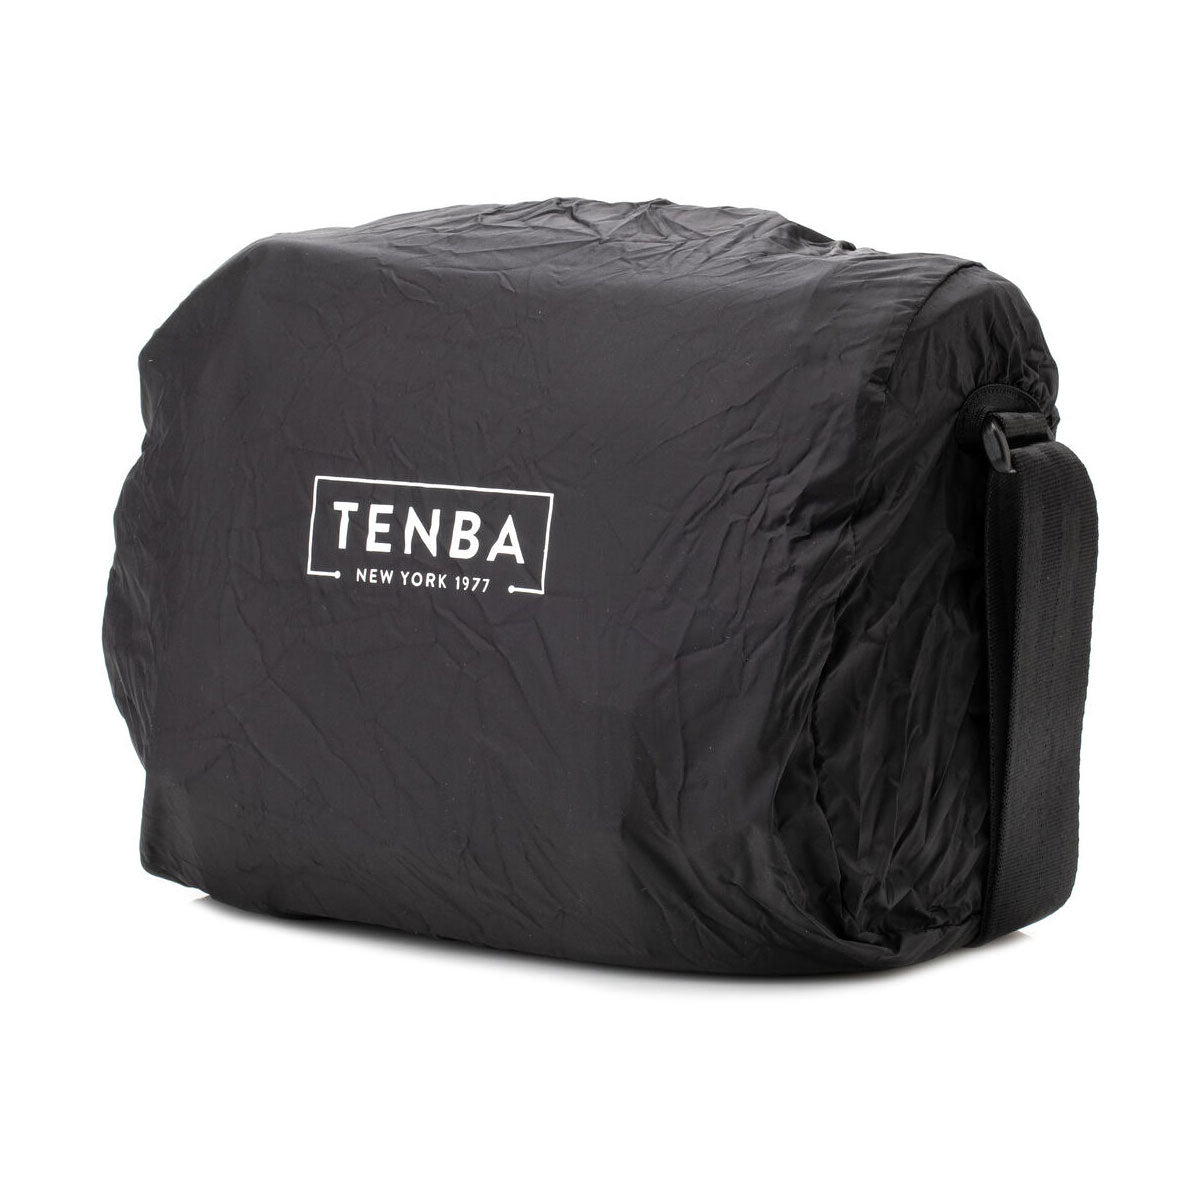 Tenba DNA 9 Black Messenger Bag